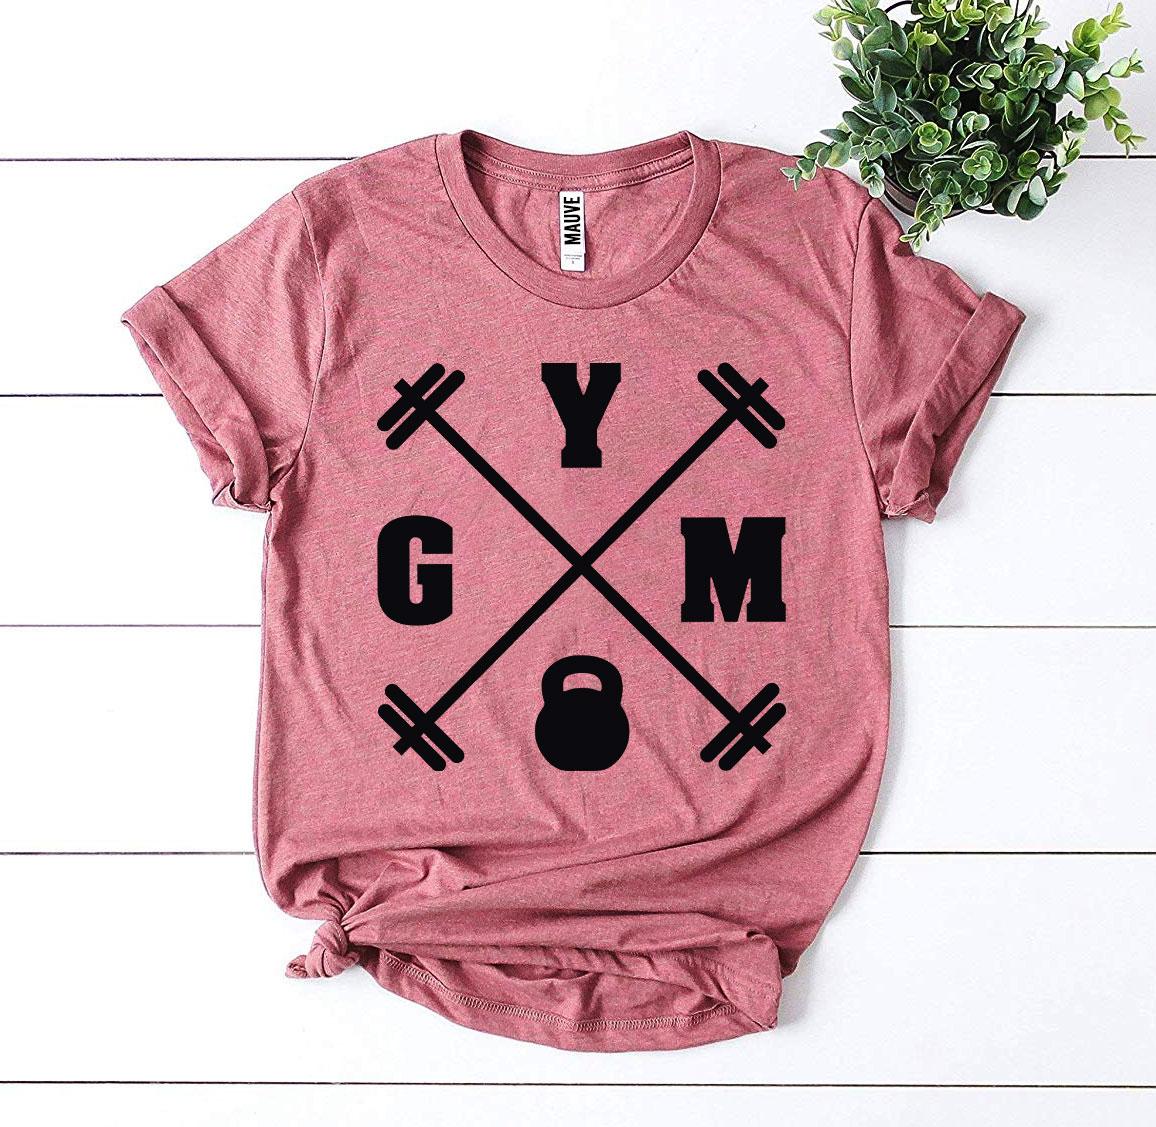 Gym T-shirt